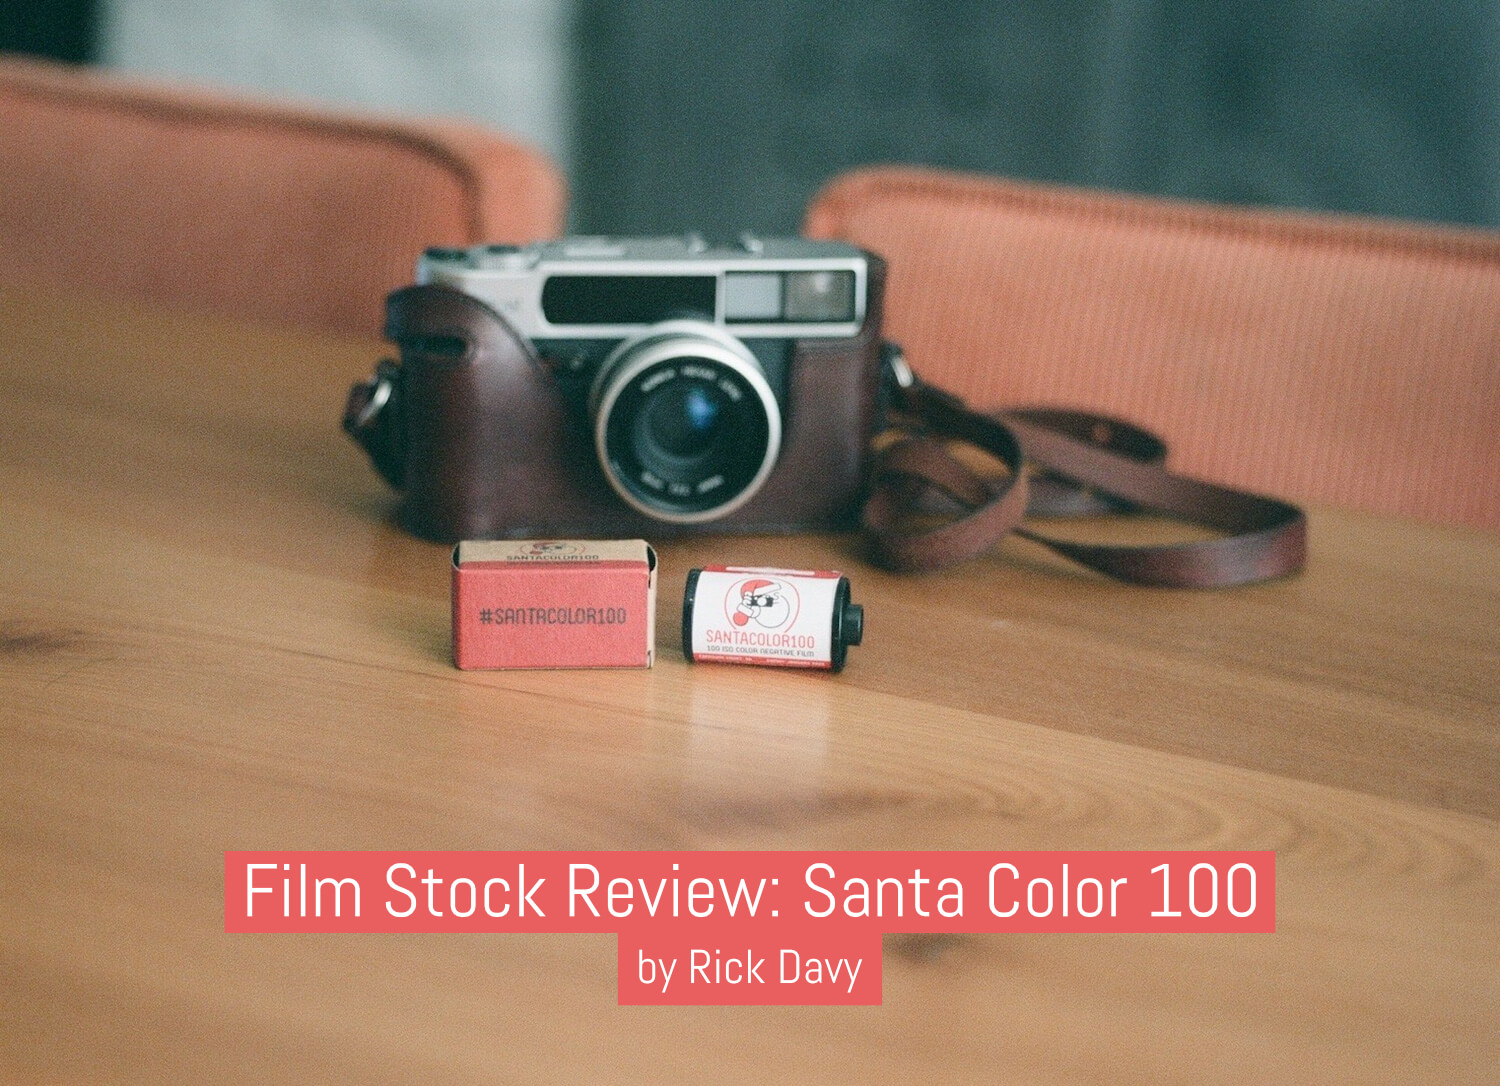 Film stock review: Santa Color 100